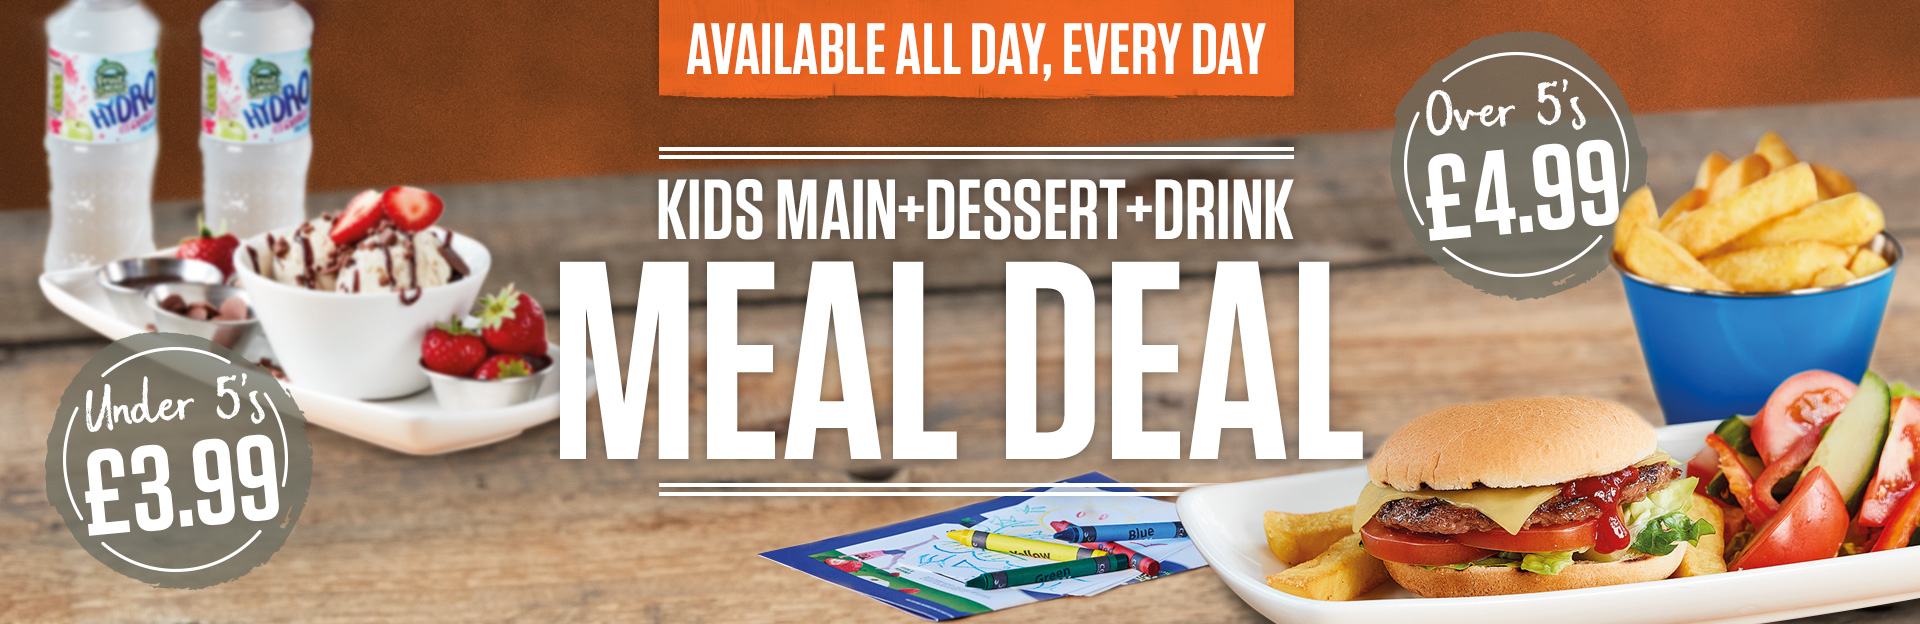 kids-meal-deal-banner.jpg